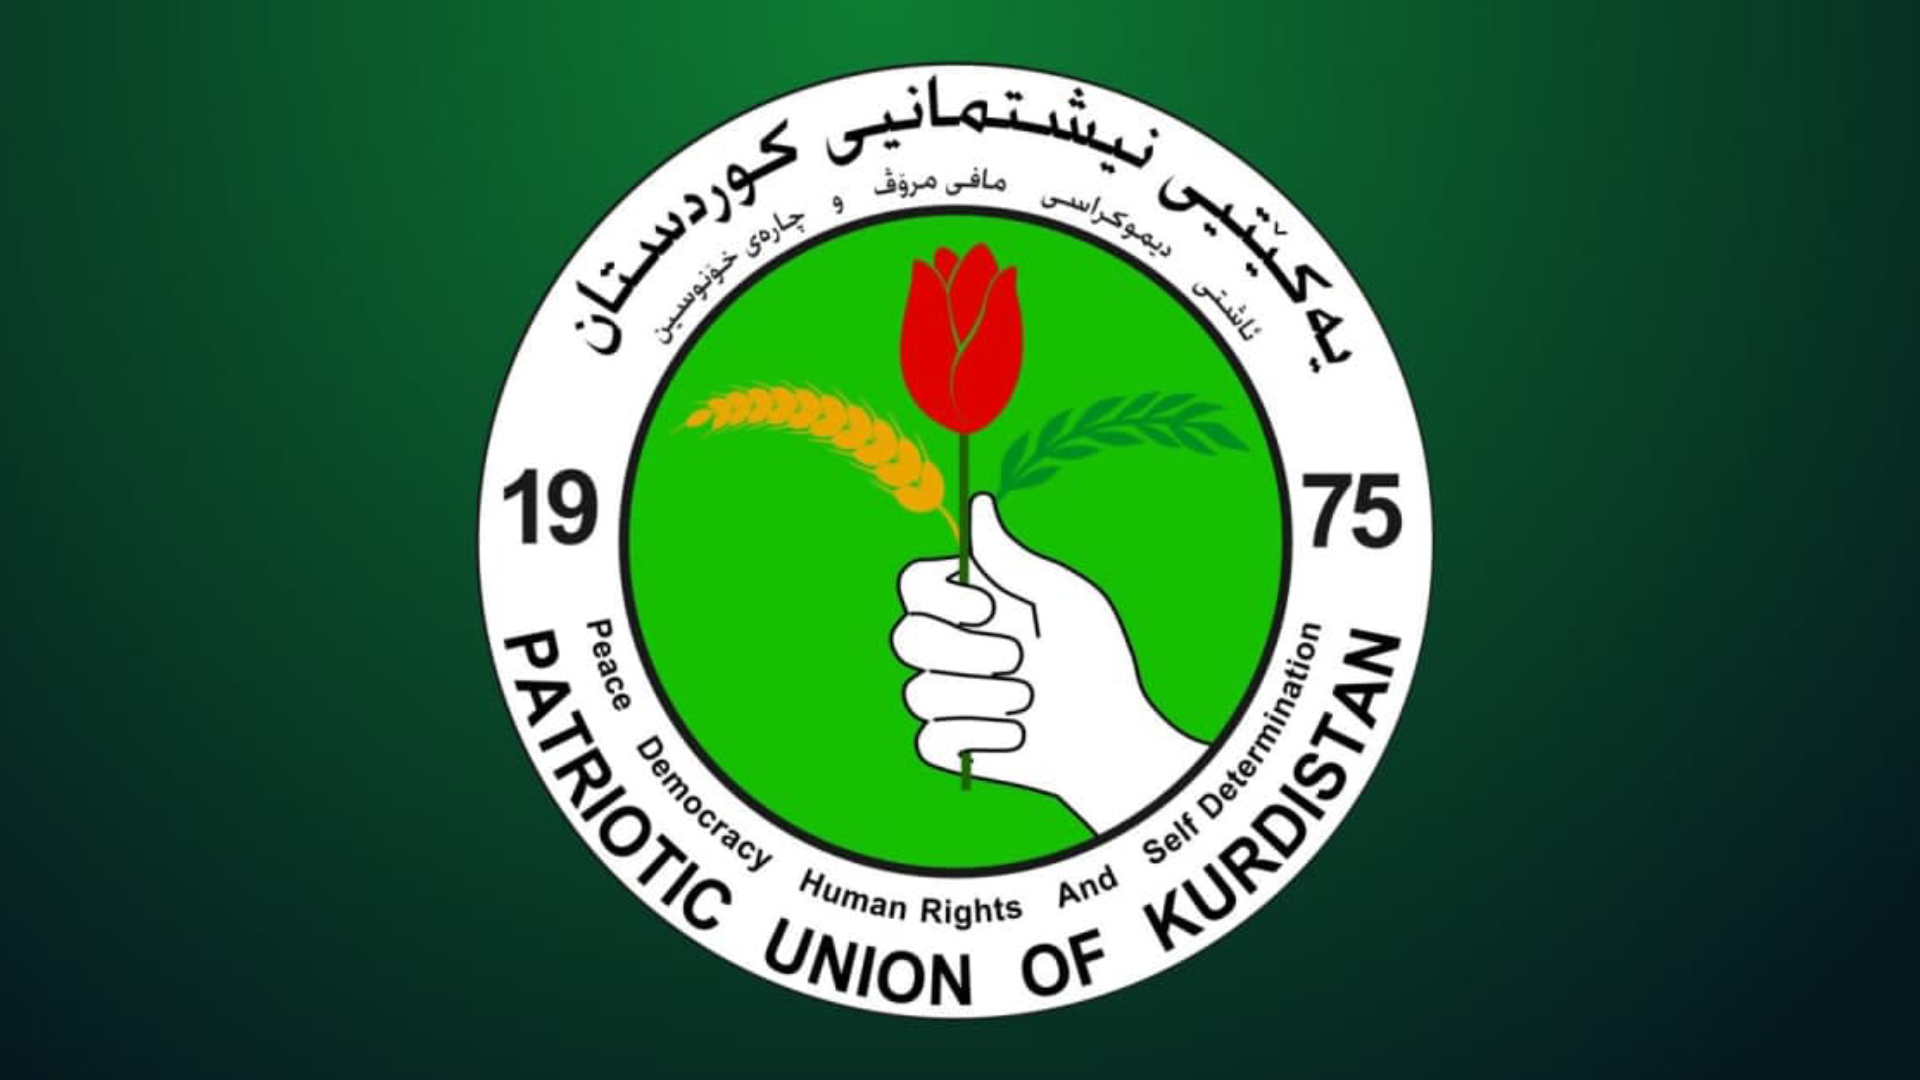  The Patriotic Union of Kurdistan